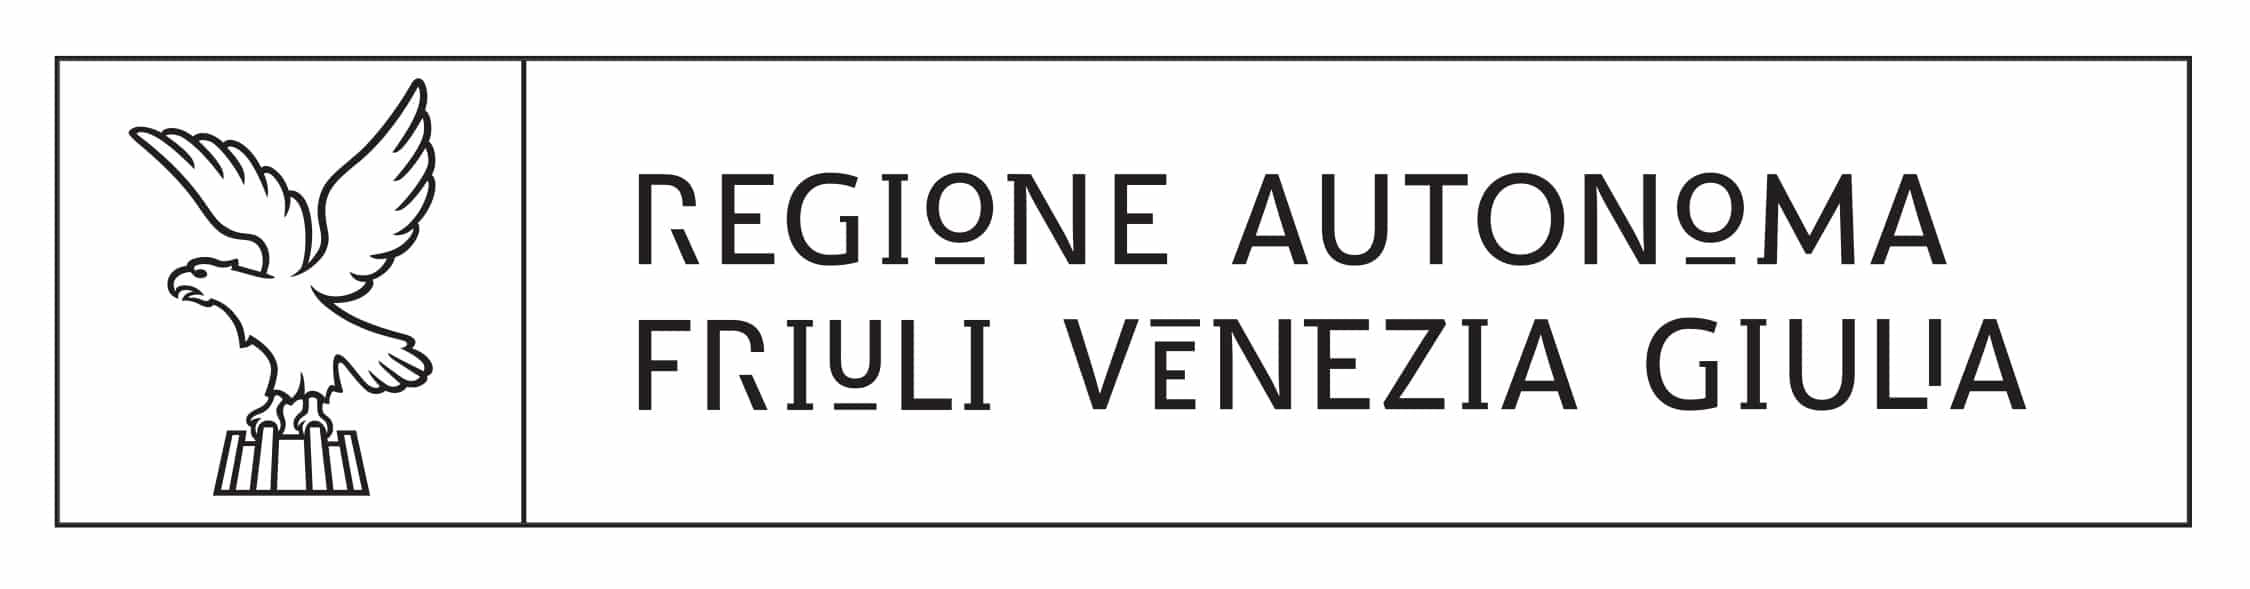 logo Regione Autonoma Friuli Venezia Giulia